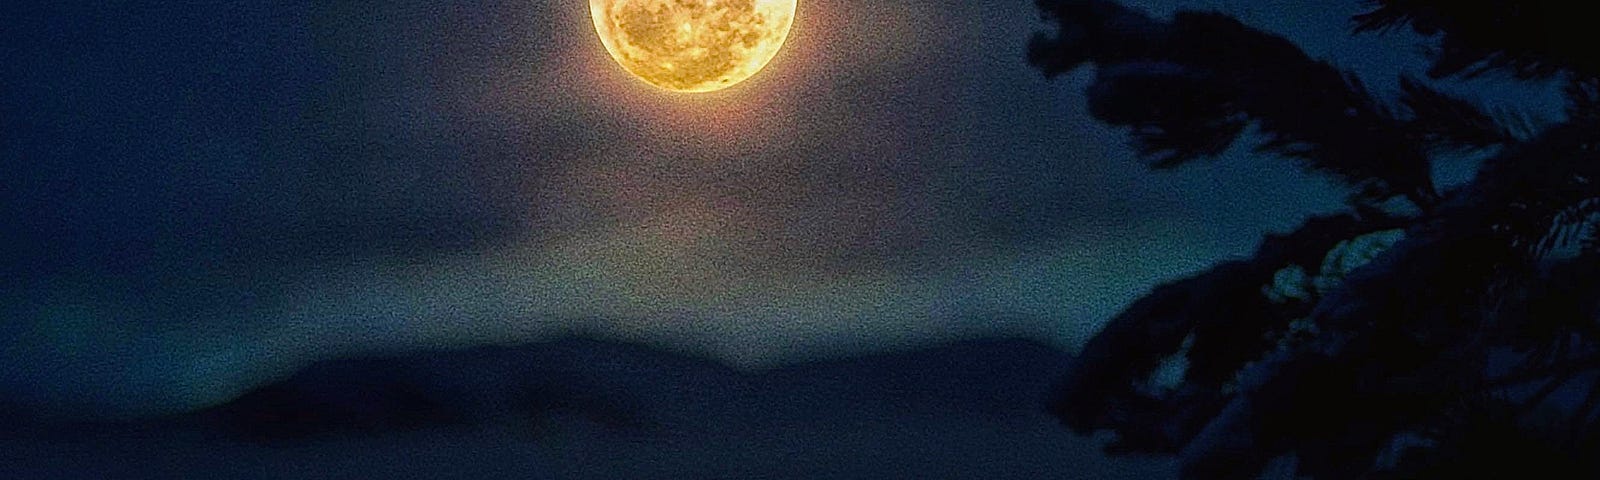 huge glowing moon on a winter night